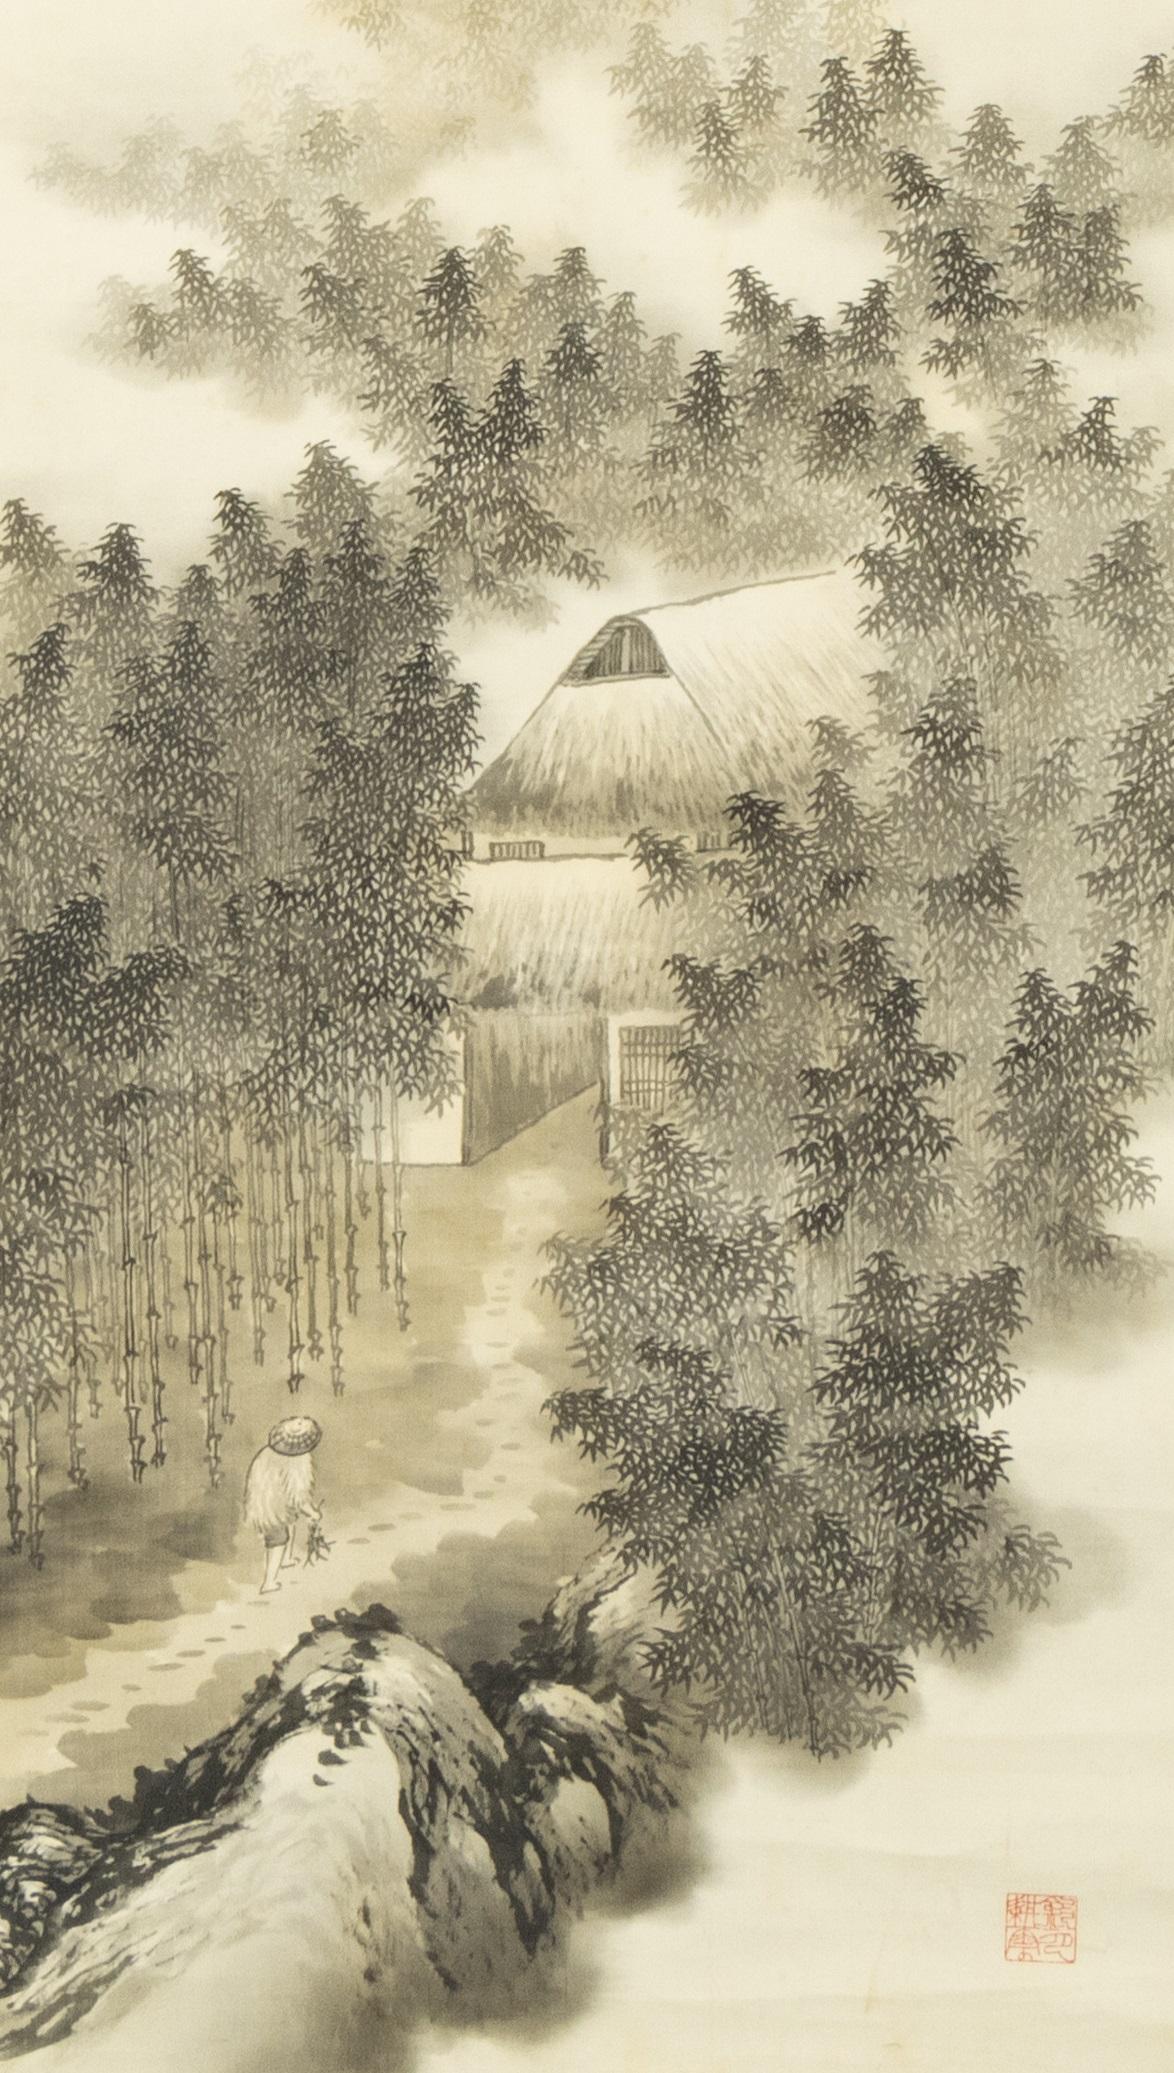 Japanse school Boerderij in bamboebos in maanlicht
Rolschildering / scroll op zijde, benen rollers. B 140.4 x 42 / 198.5 x 54.5 cm
140.4 x 42 / 198.5 x 54.5 cm.